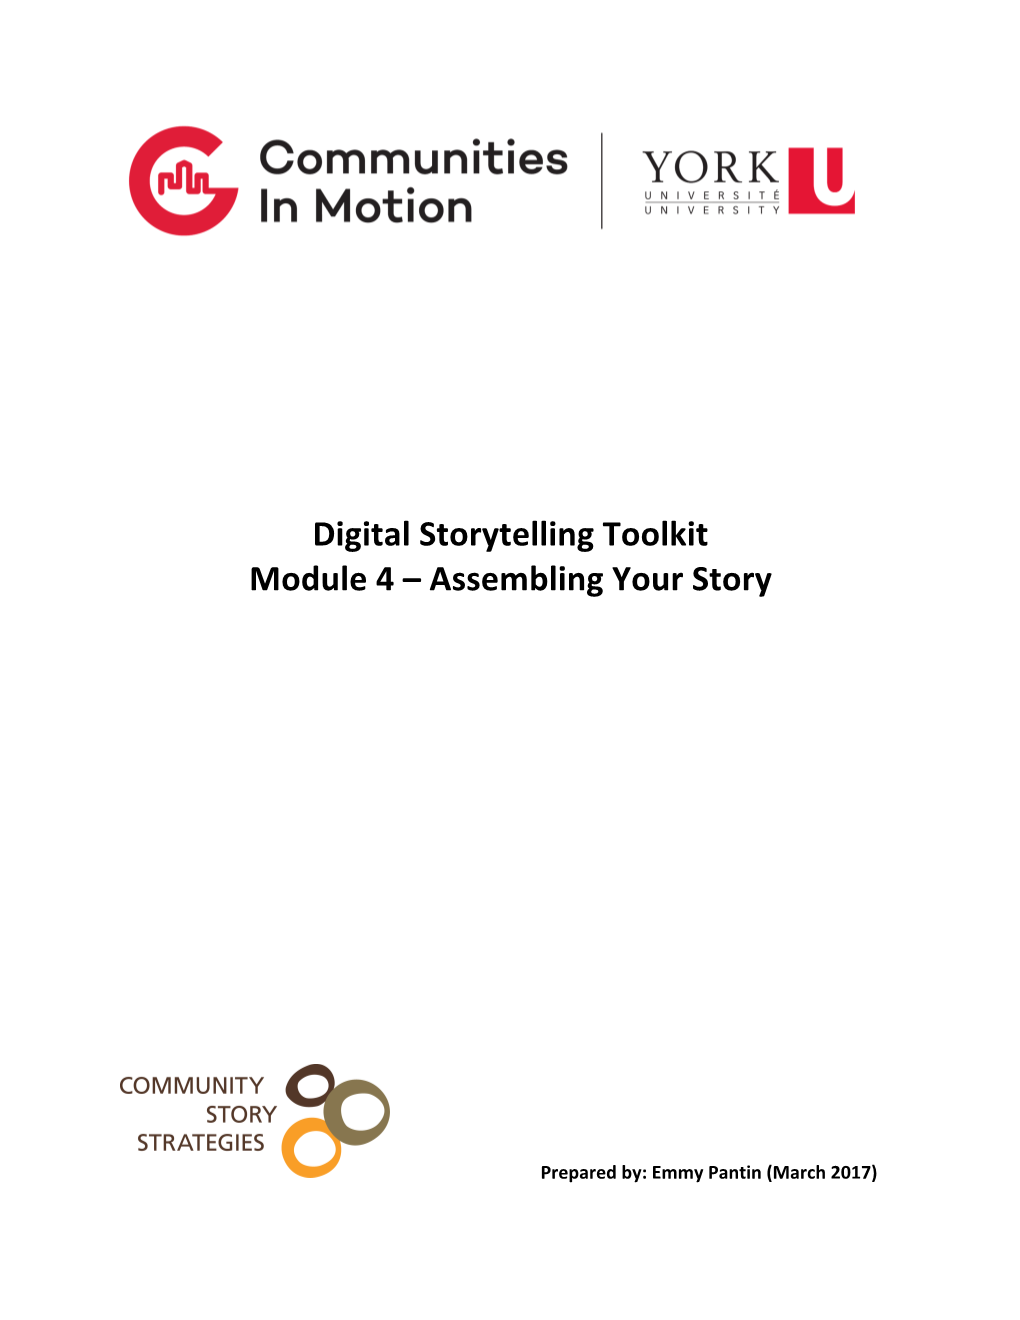 Digital Storytelling Toolkit Module 4 – Assembling Your Story